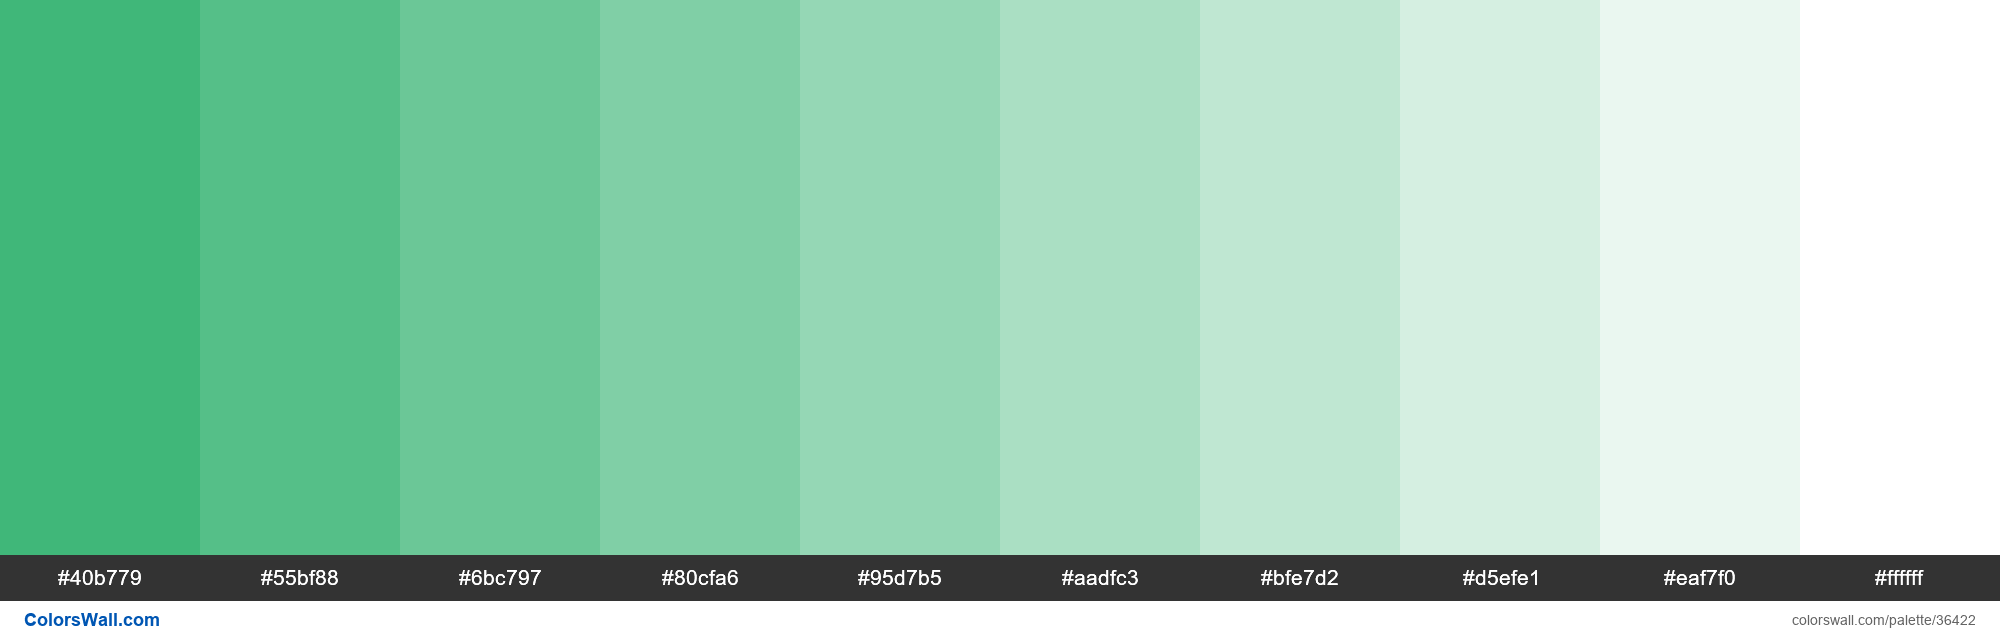 Tints XKCD Color jade green #2baf6a hex colors palette - ColorsWall